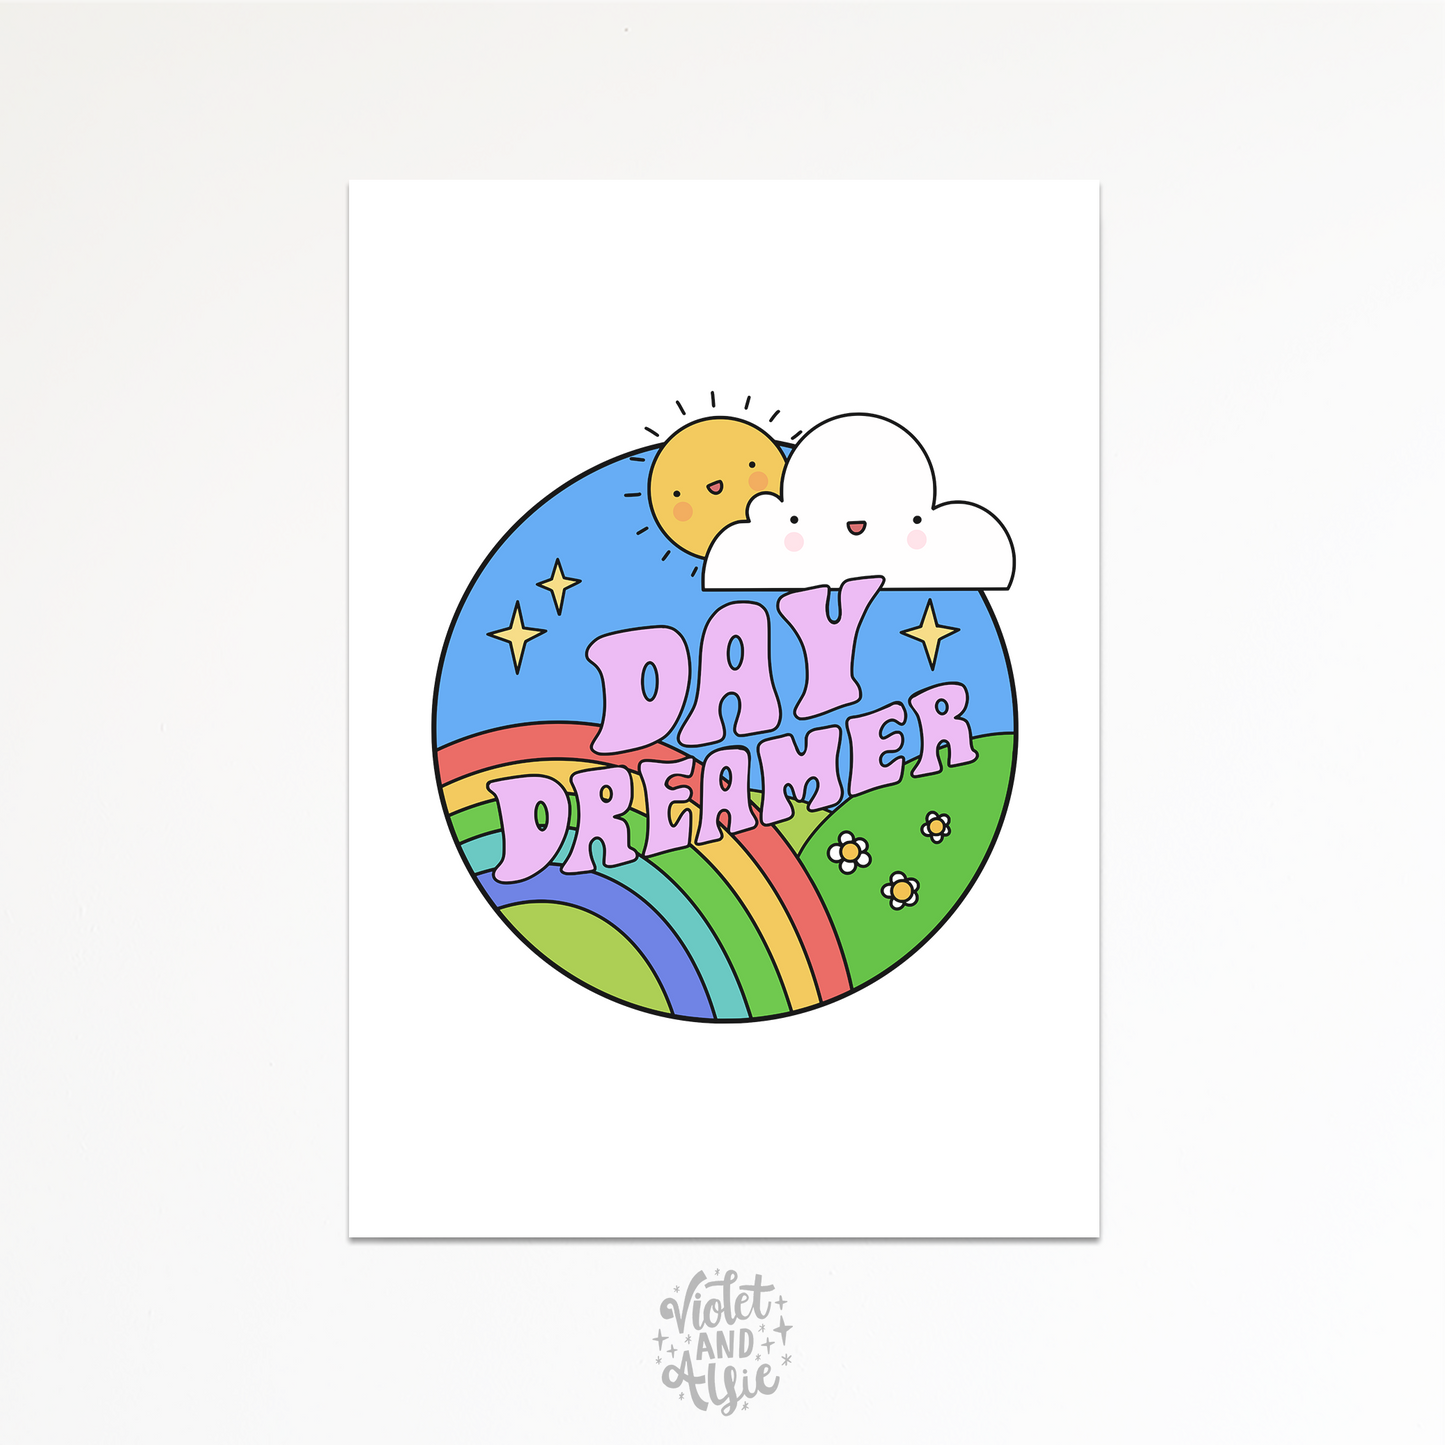 Day Dreamer Print